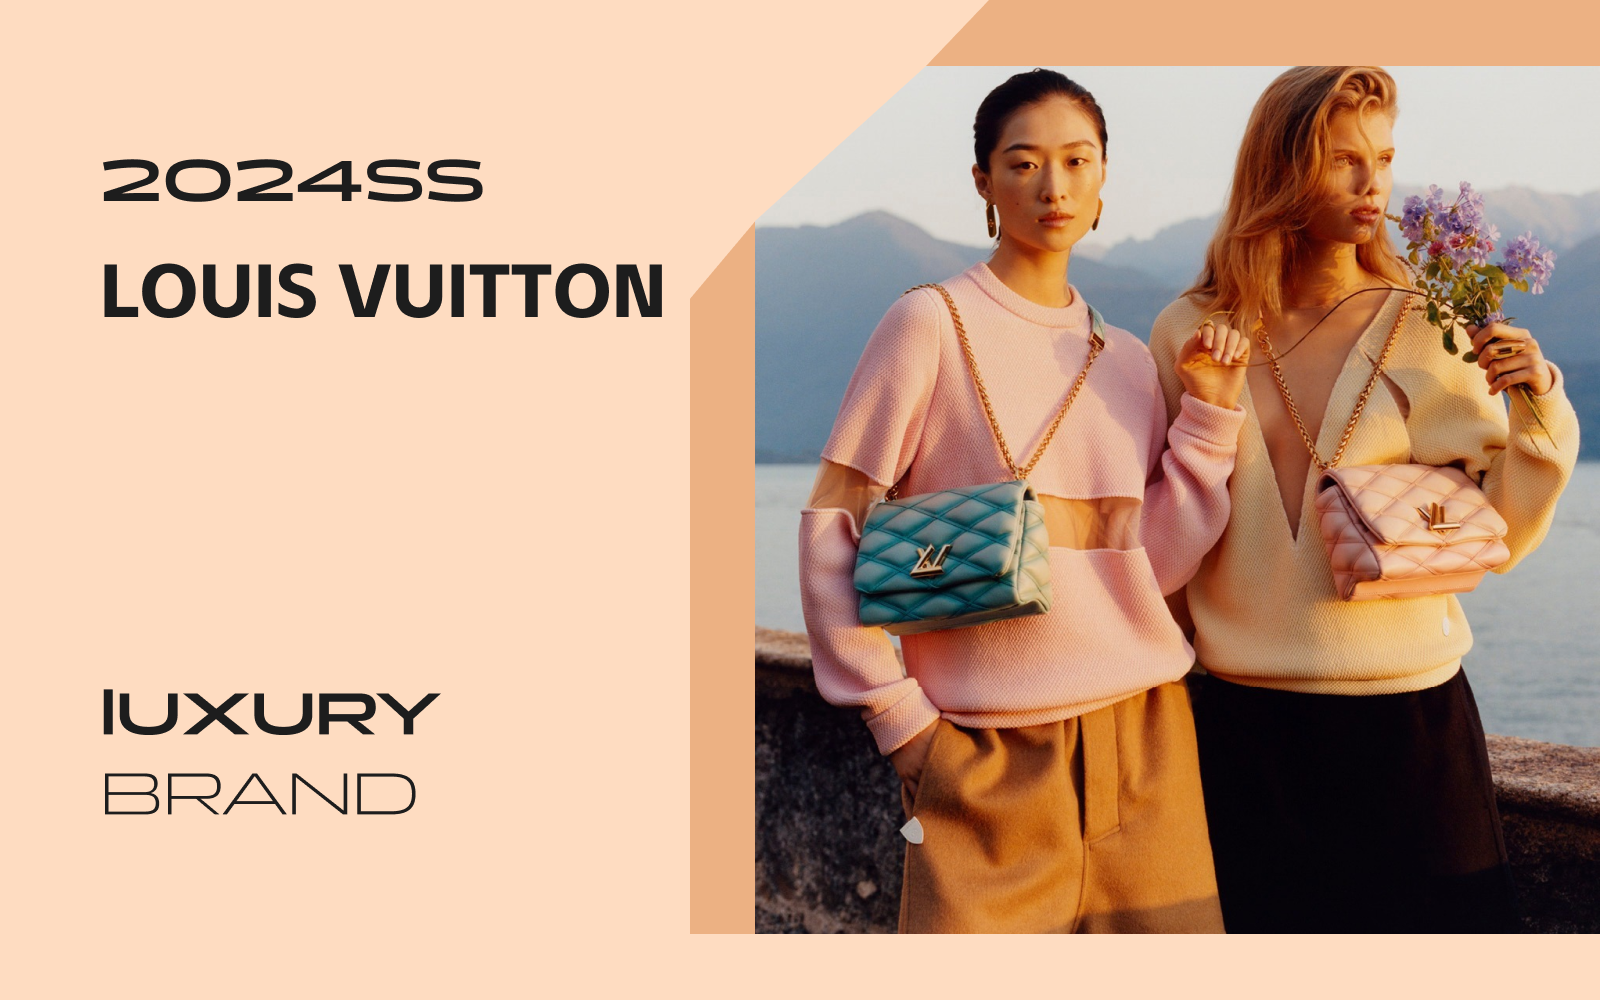 Smart Lady -- The Analysis of Louis Vuitton The Luxury Womenswear Brand